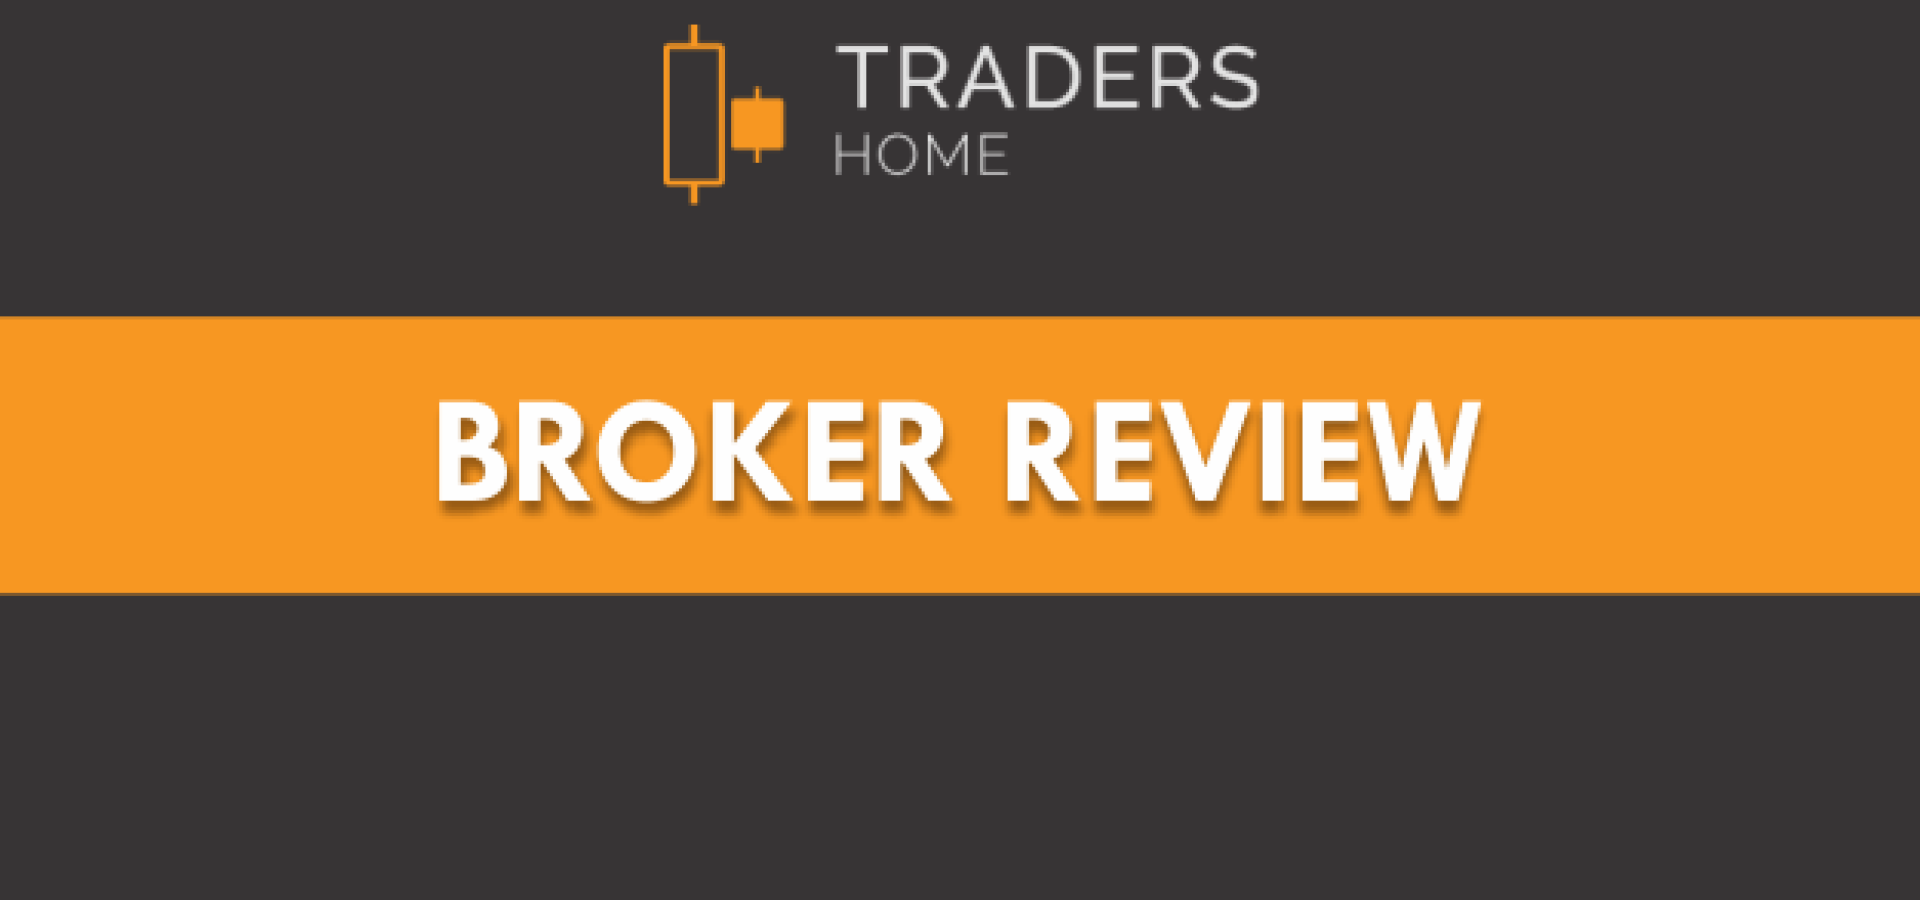 TradersHome Broker Review